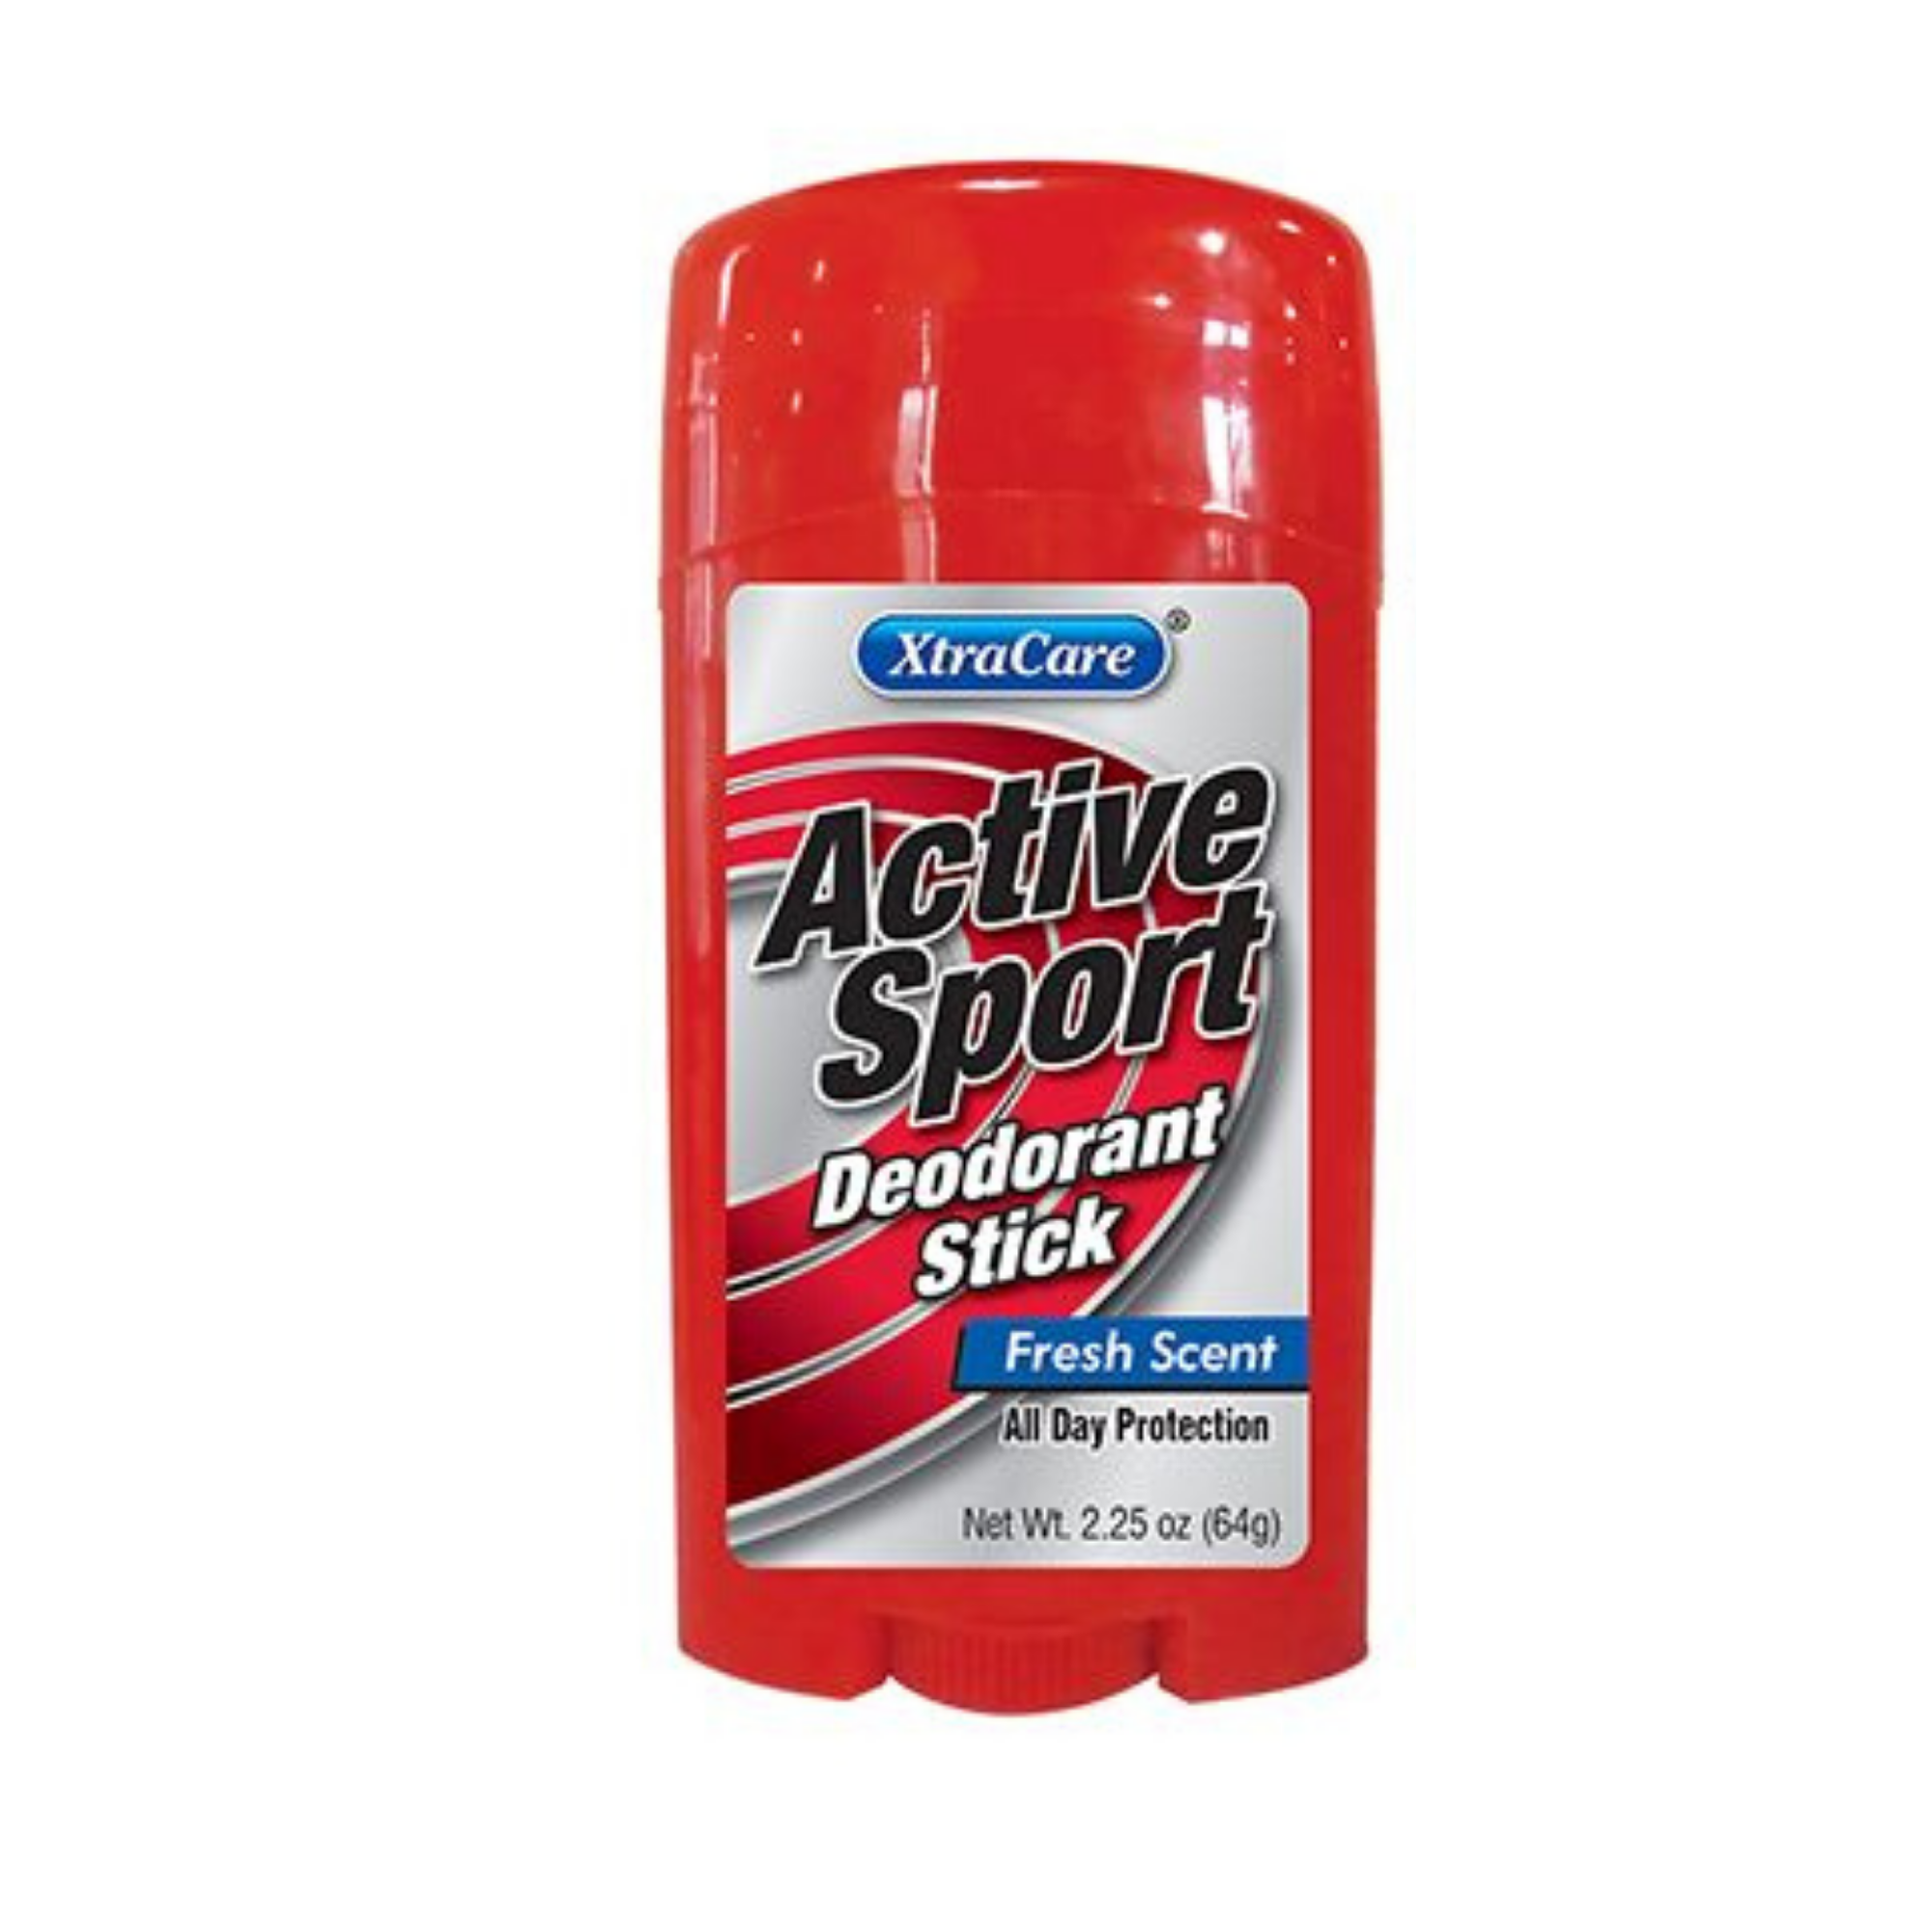 Xtracare - Active Sports Deodorant Stick - Fresh Scent